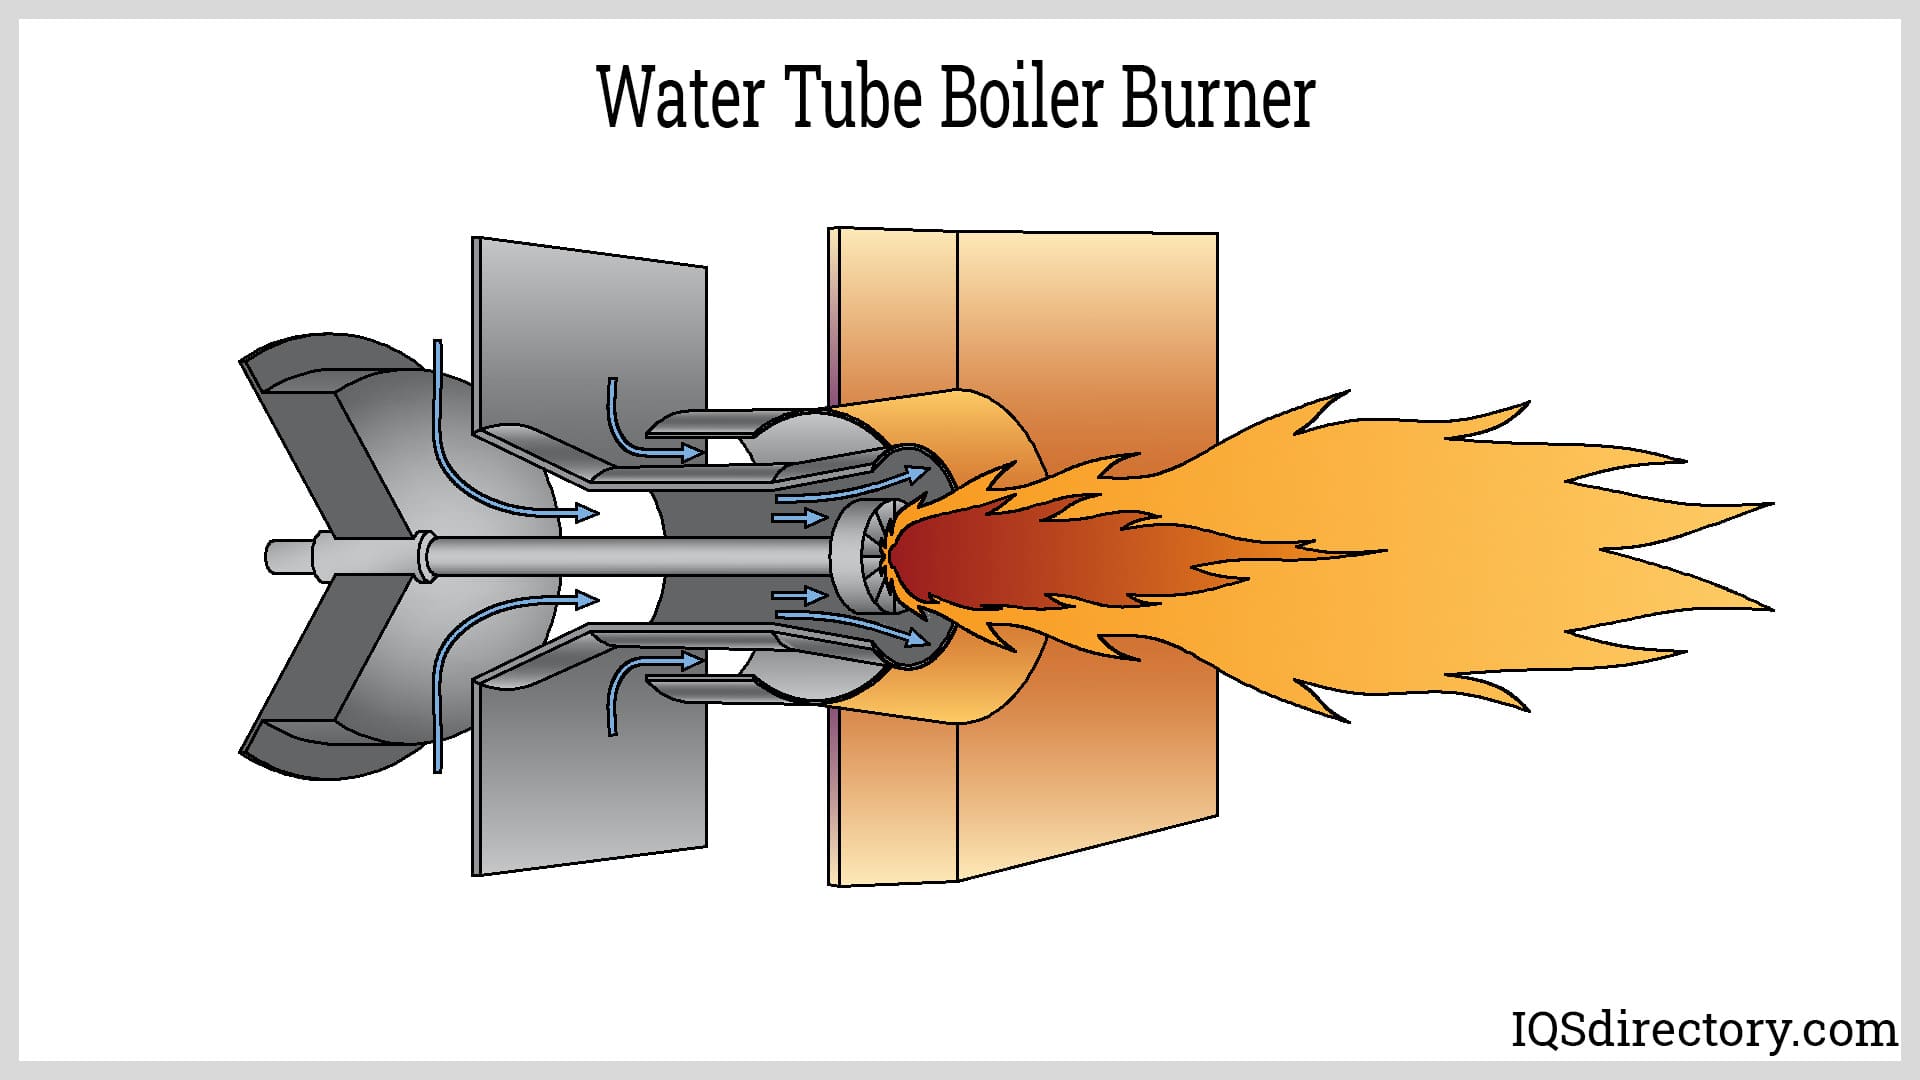 Water Tube Boiler Burner